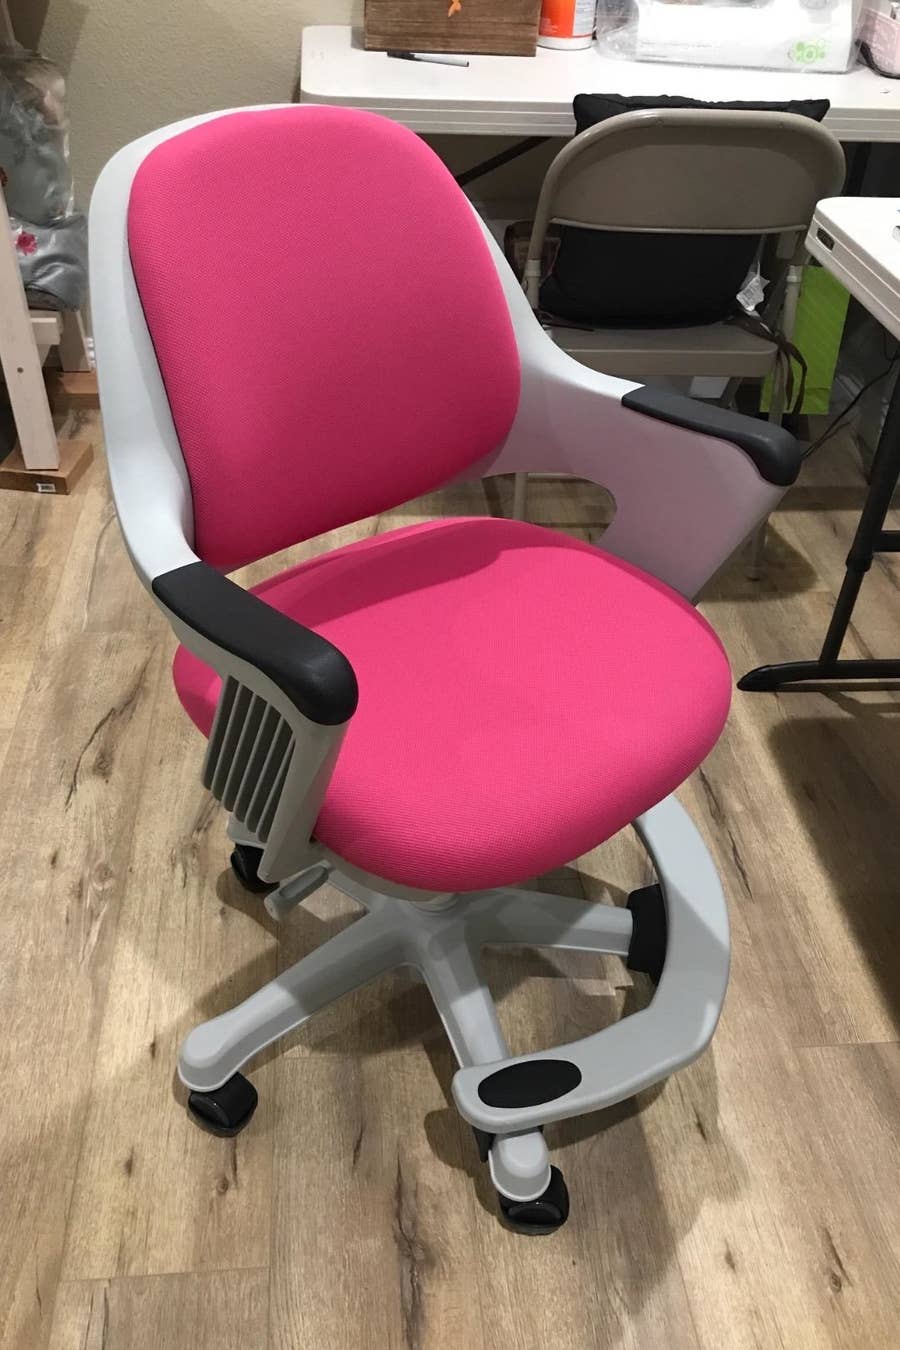 Correct Desk & Chair Positioning for Children